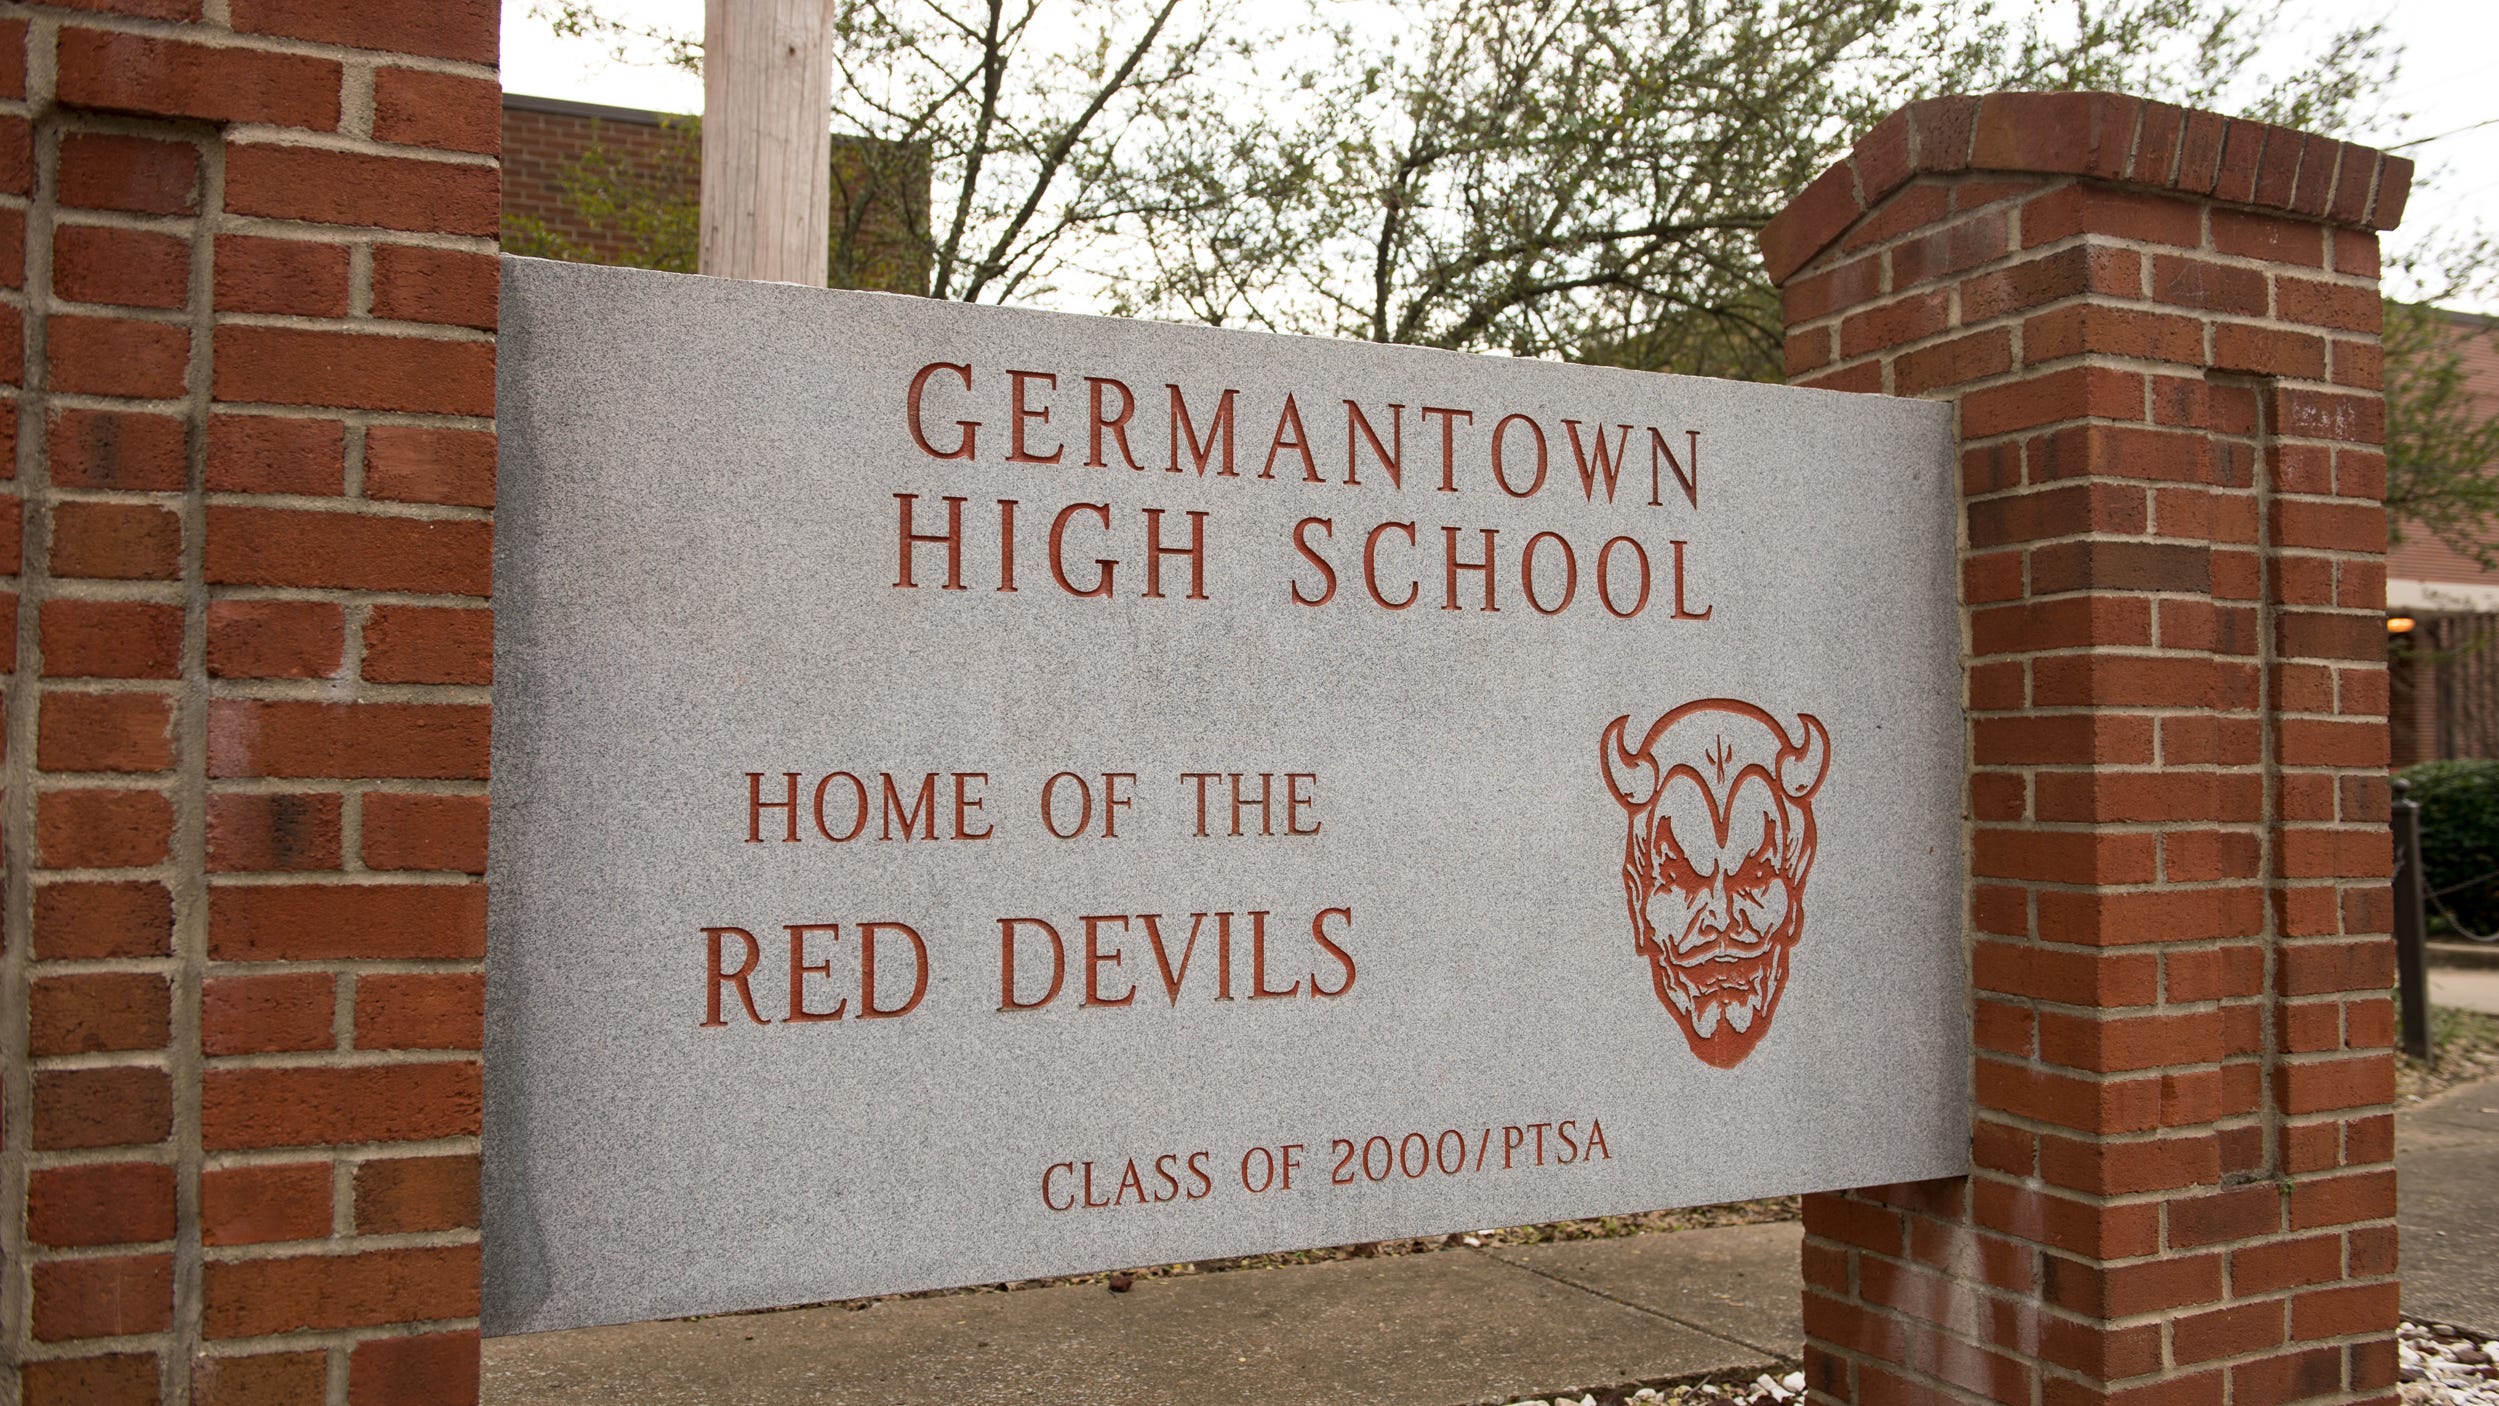 Three SCS schools in Germantown could municipal schools under